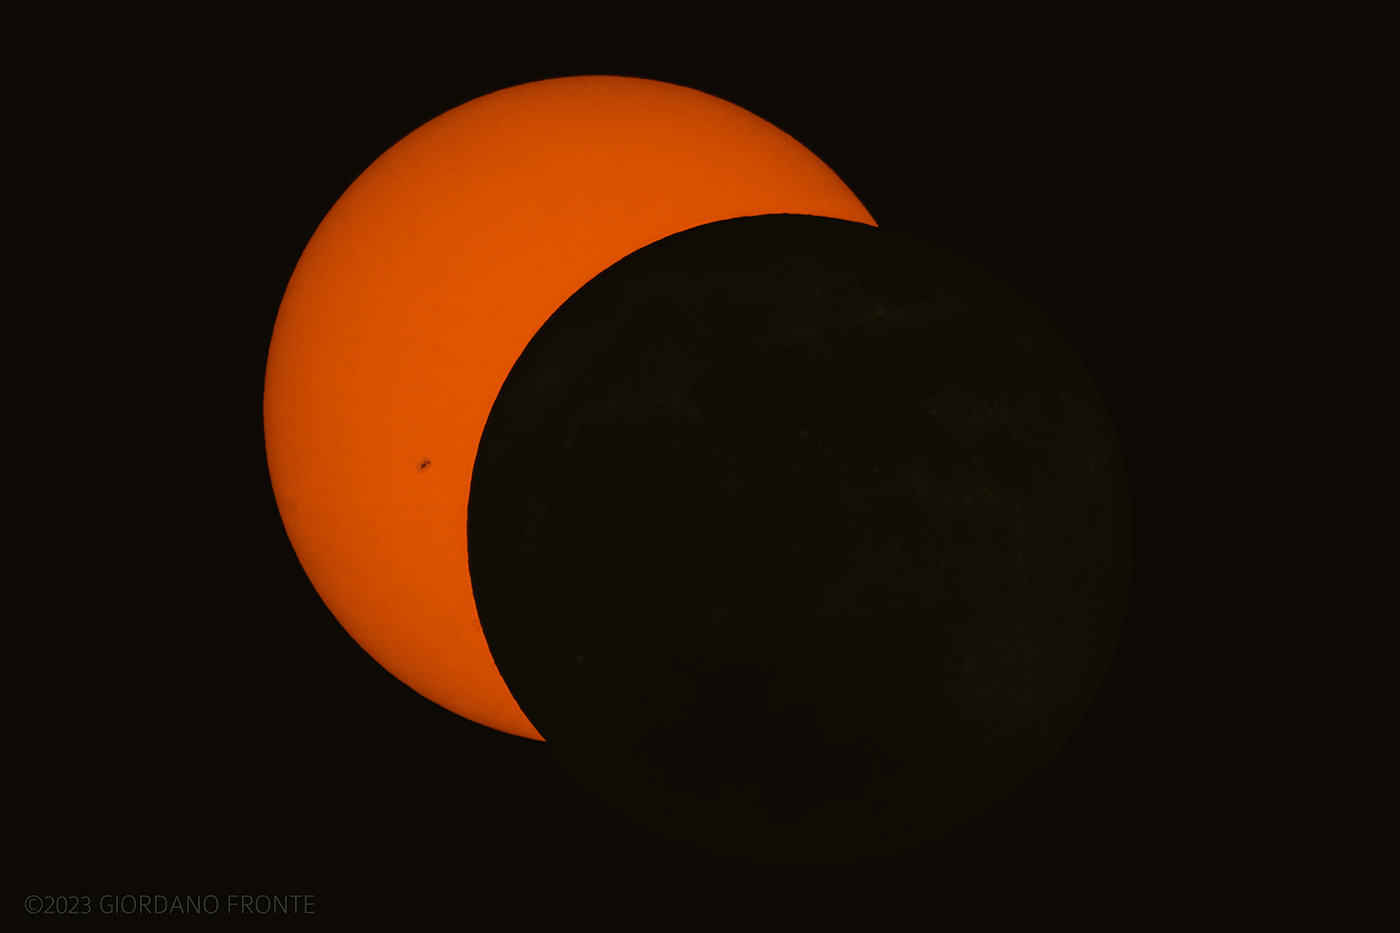 eclipse lunar eclipse solar eclipse ISS transit